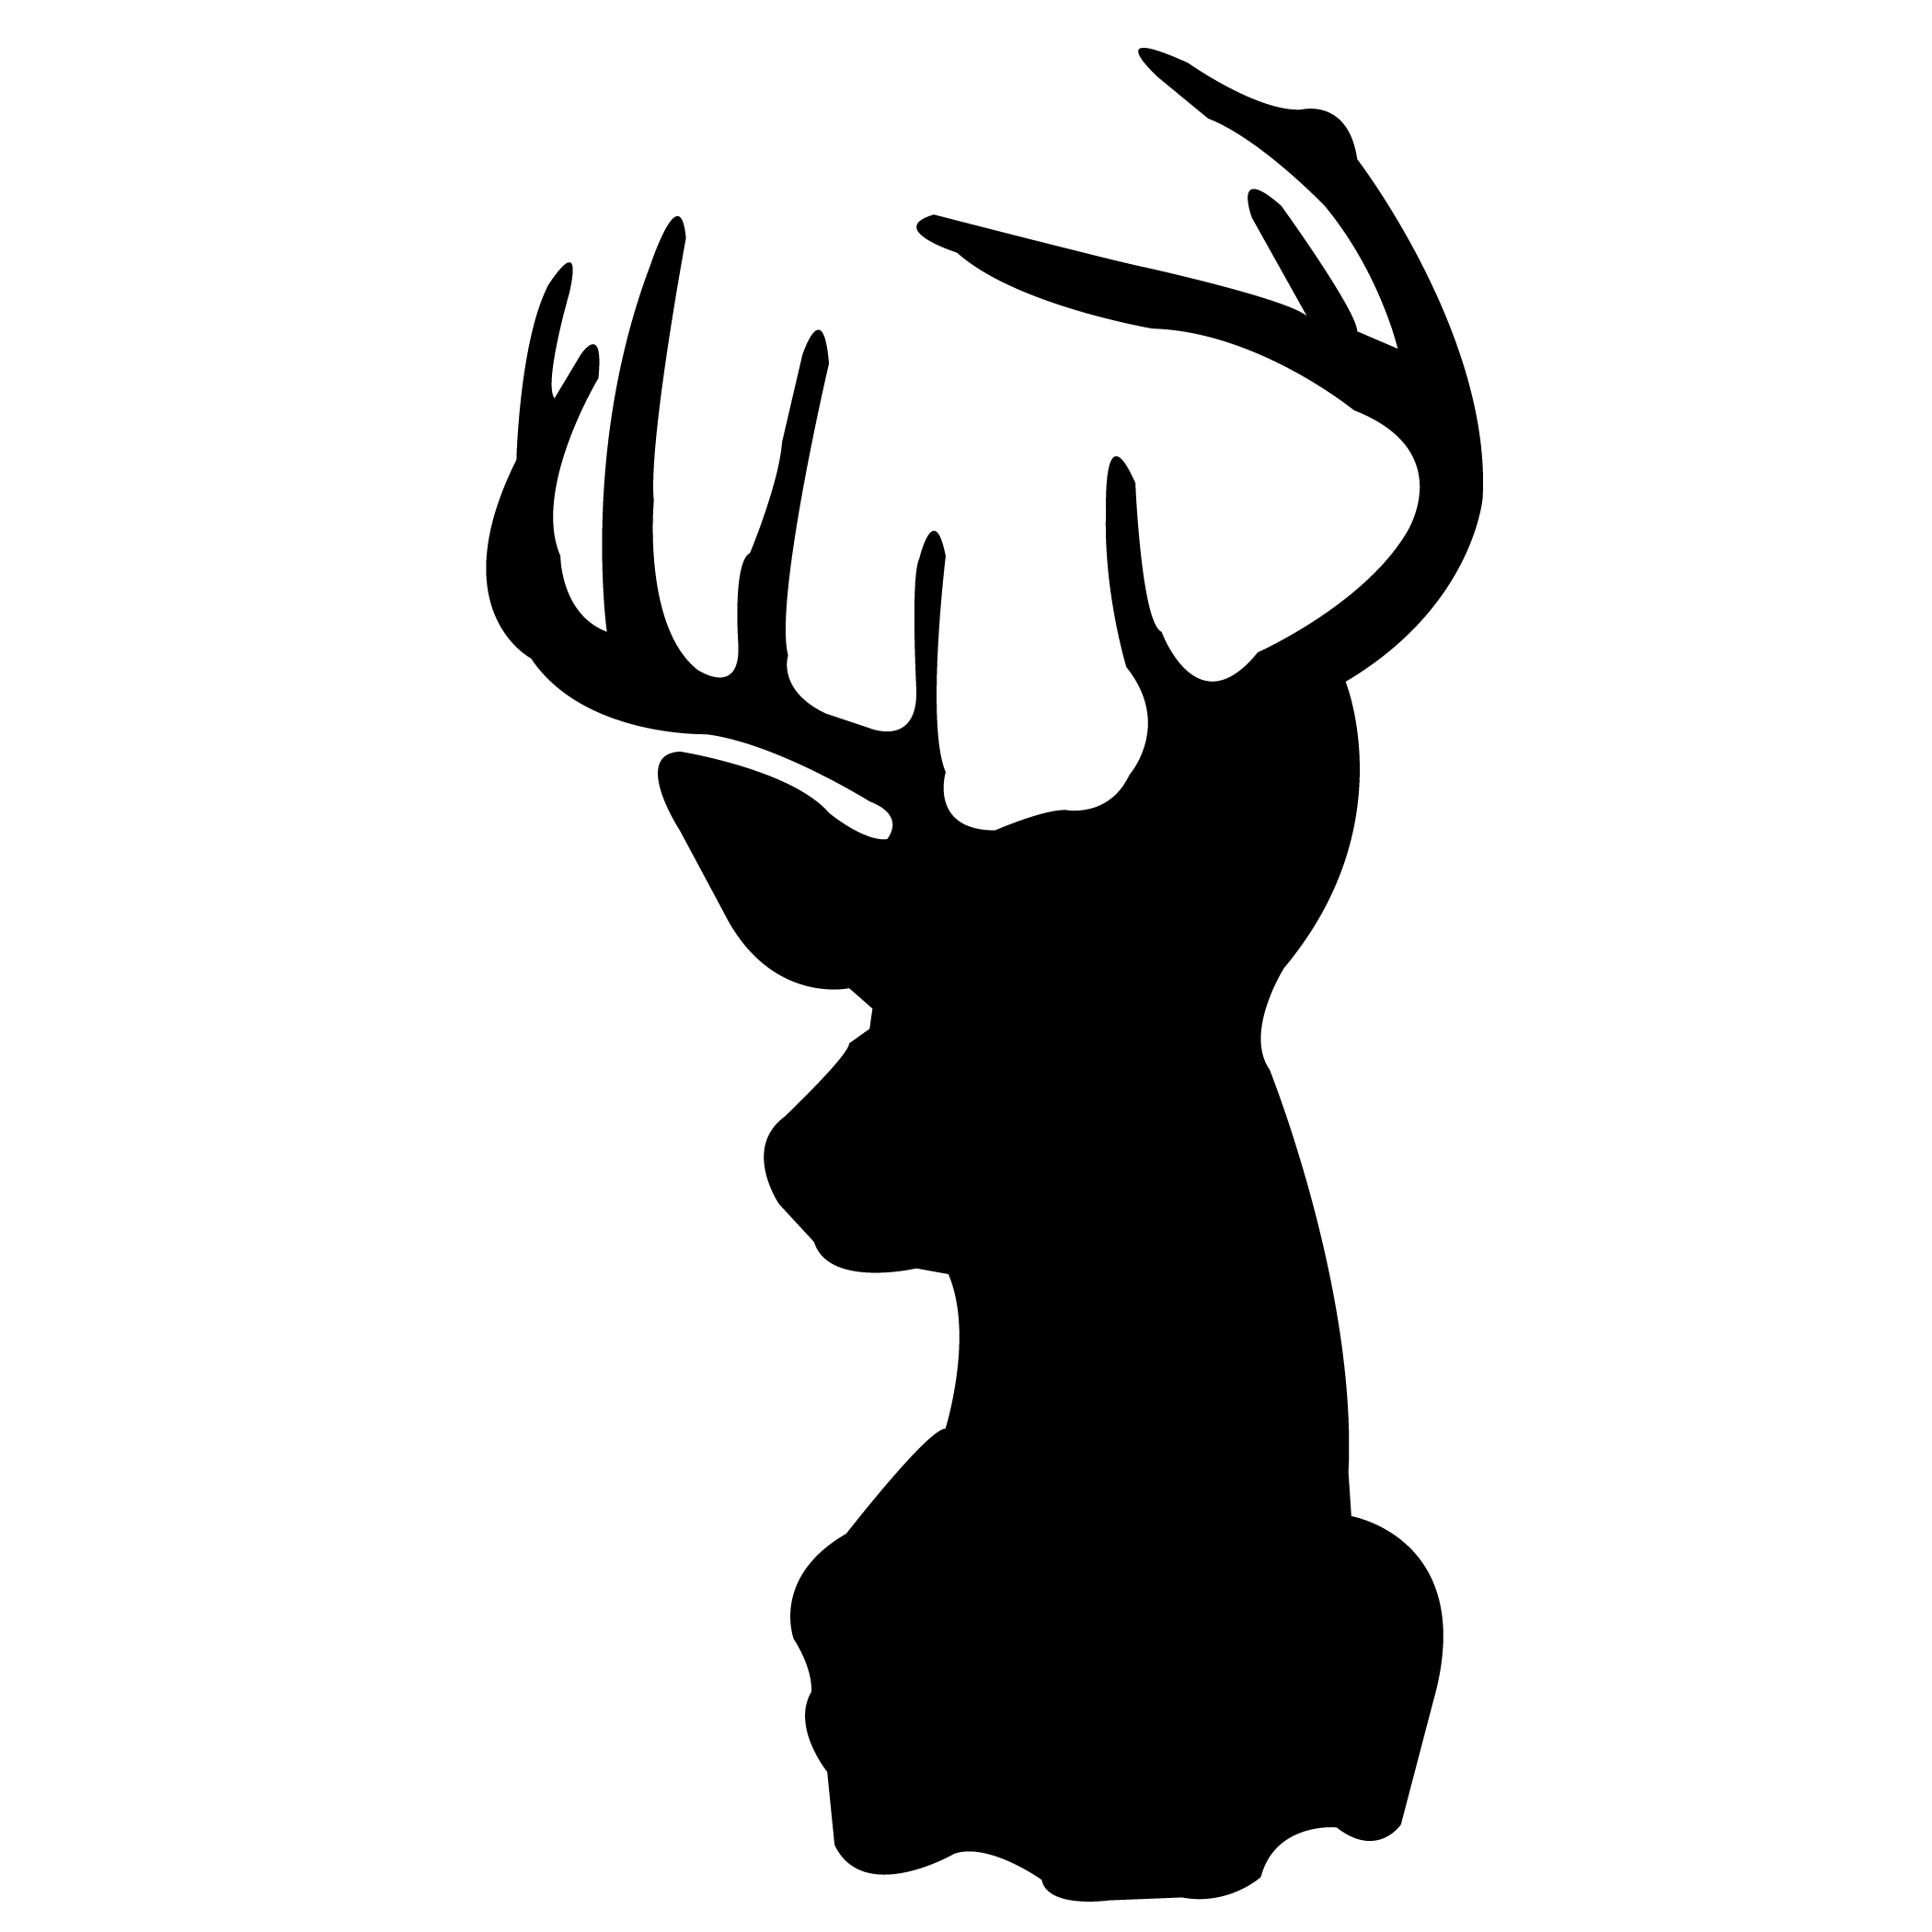 Deer Outline Clipart